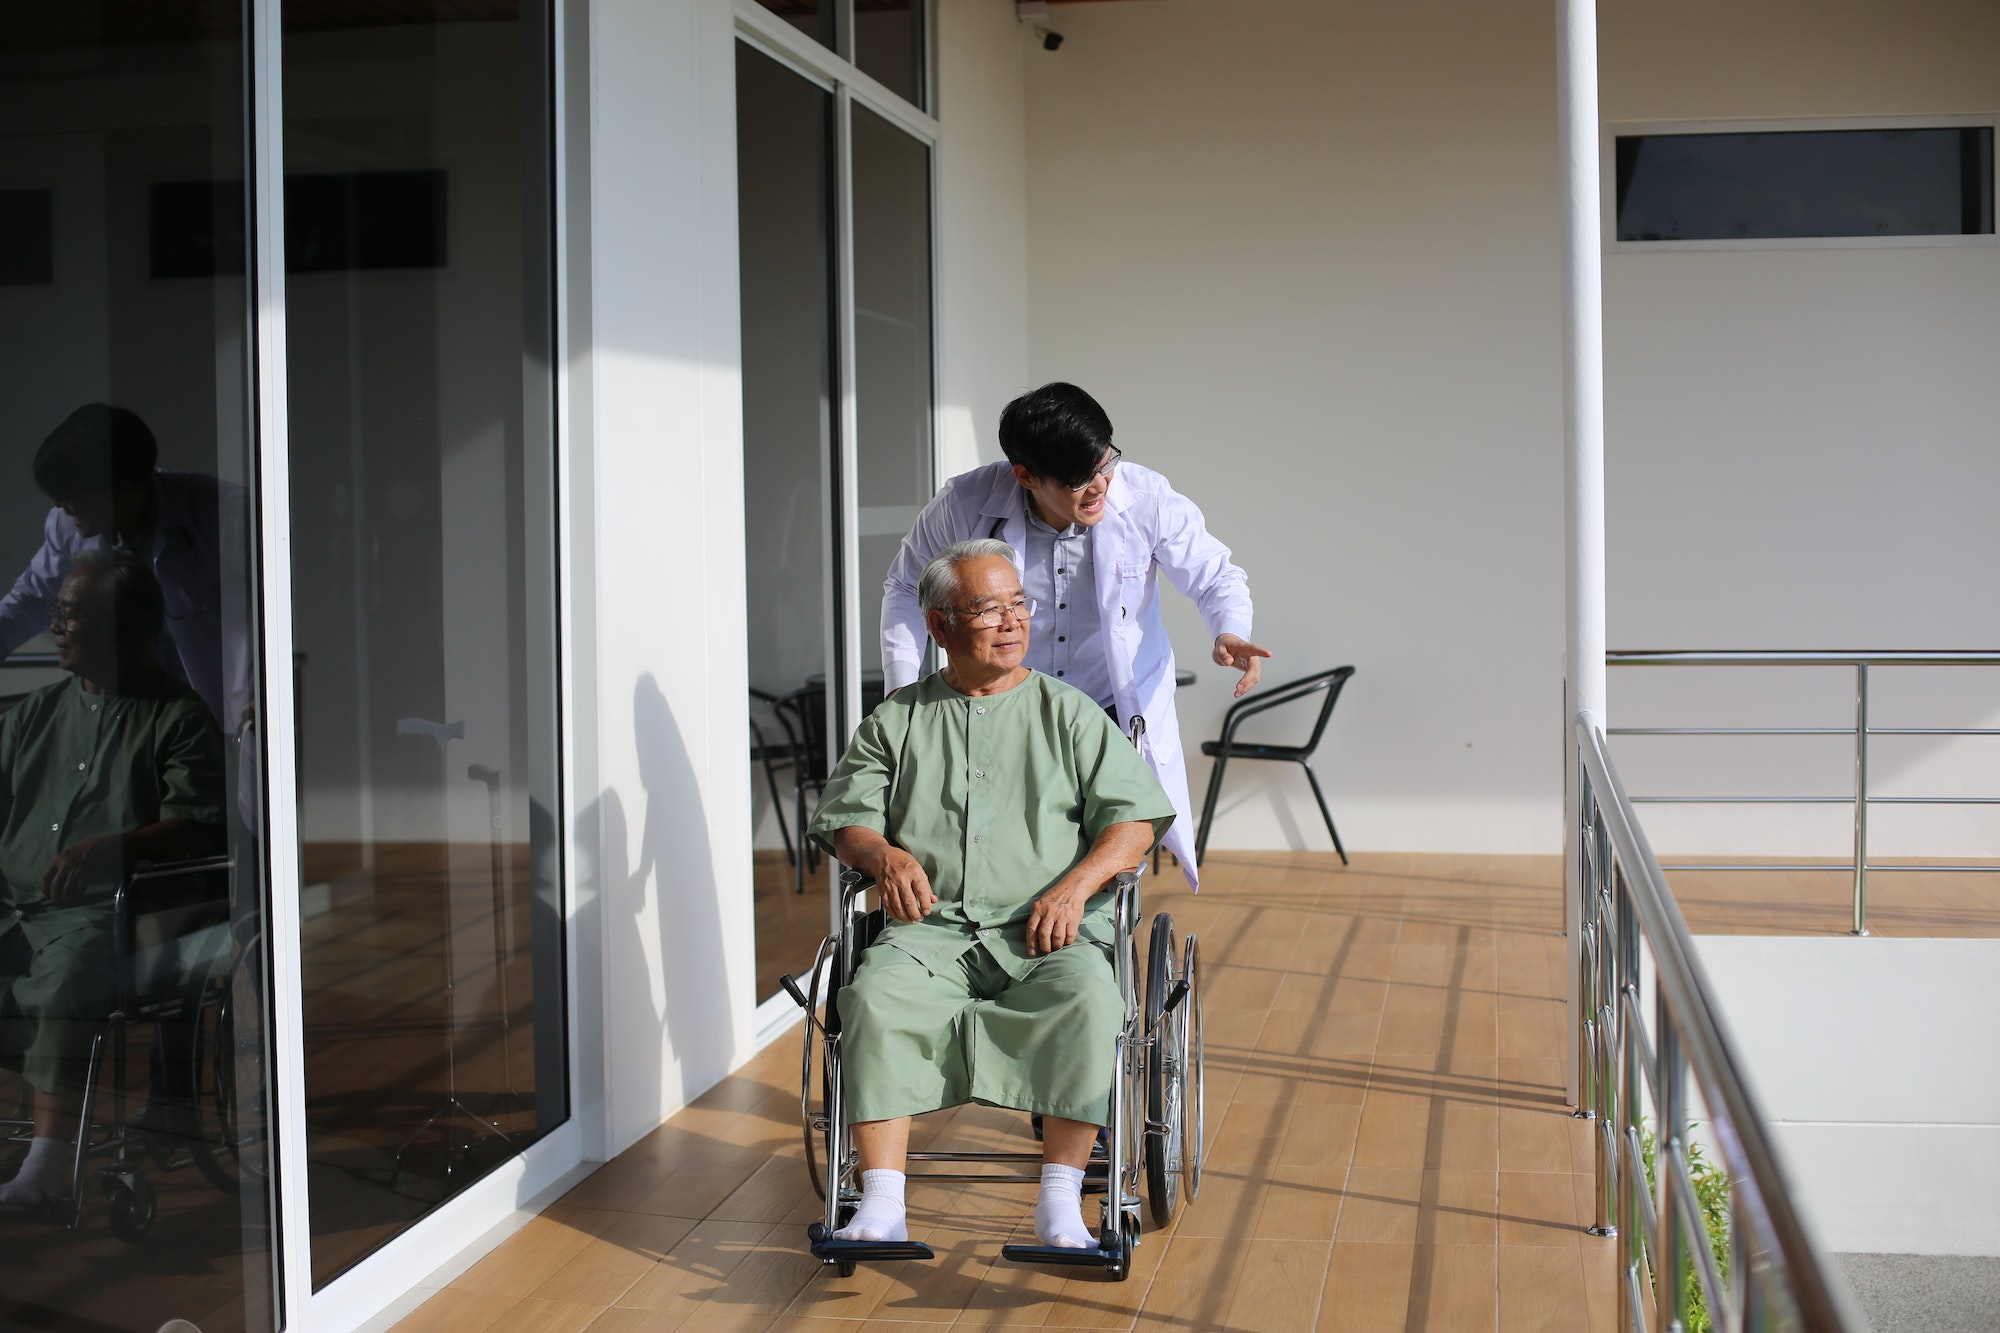 caretaker-helping-senior-man-with-disability-at-checkup-visit.jpg